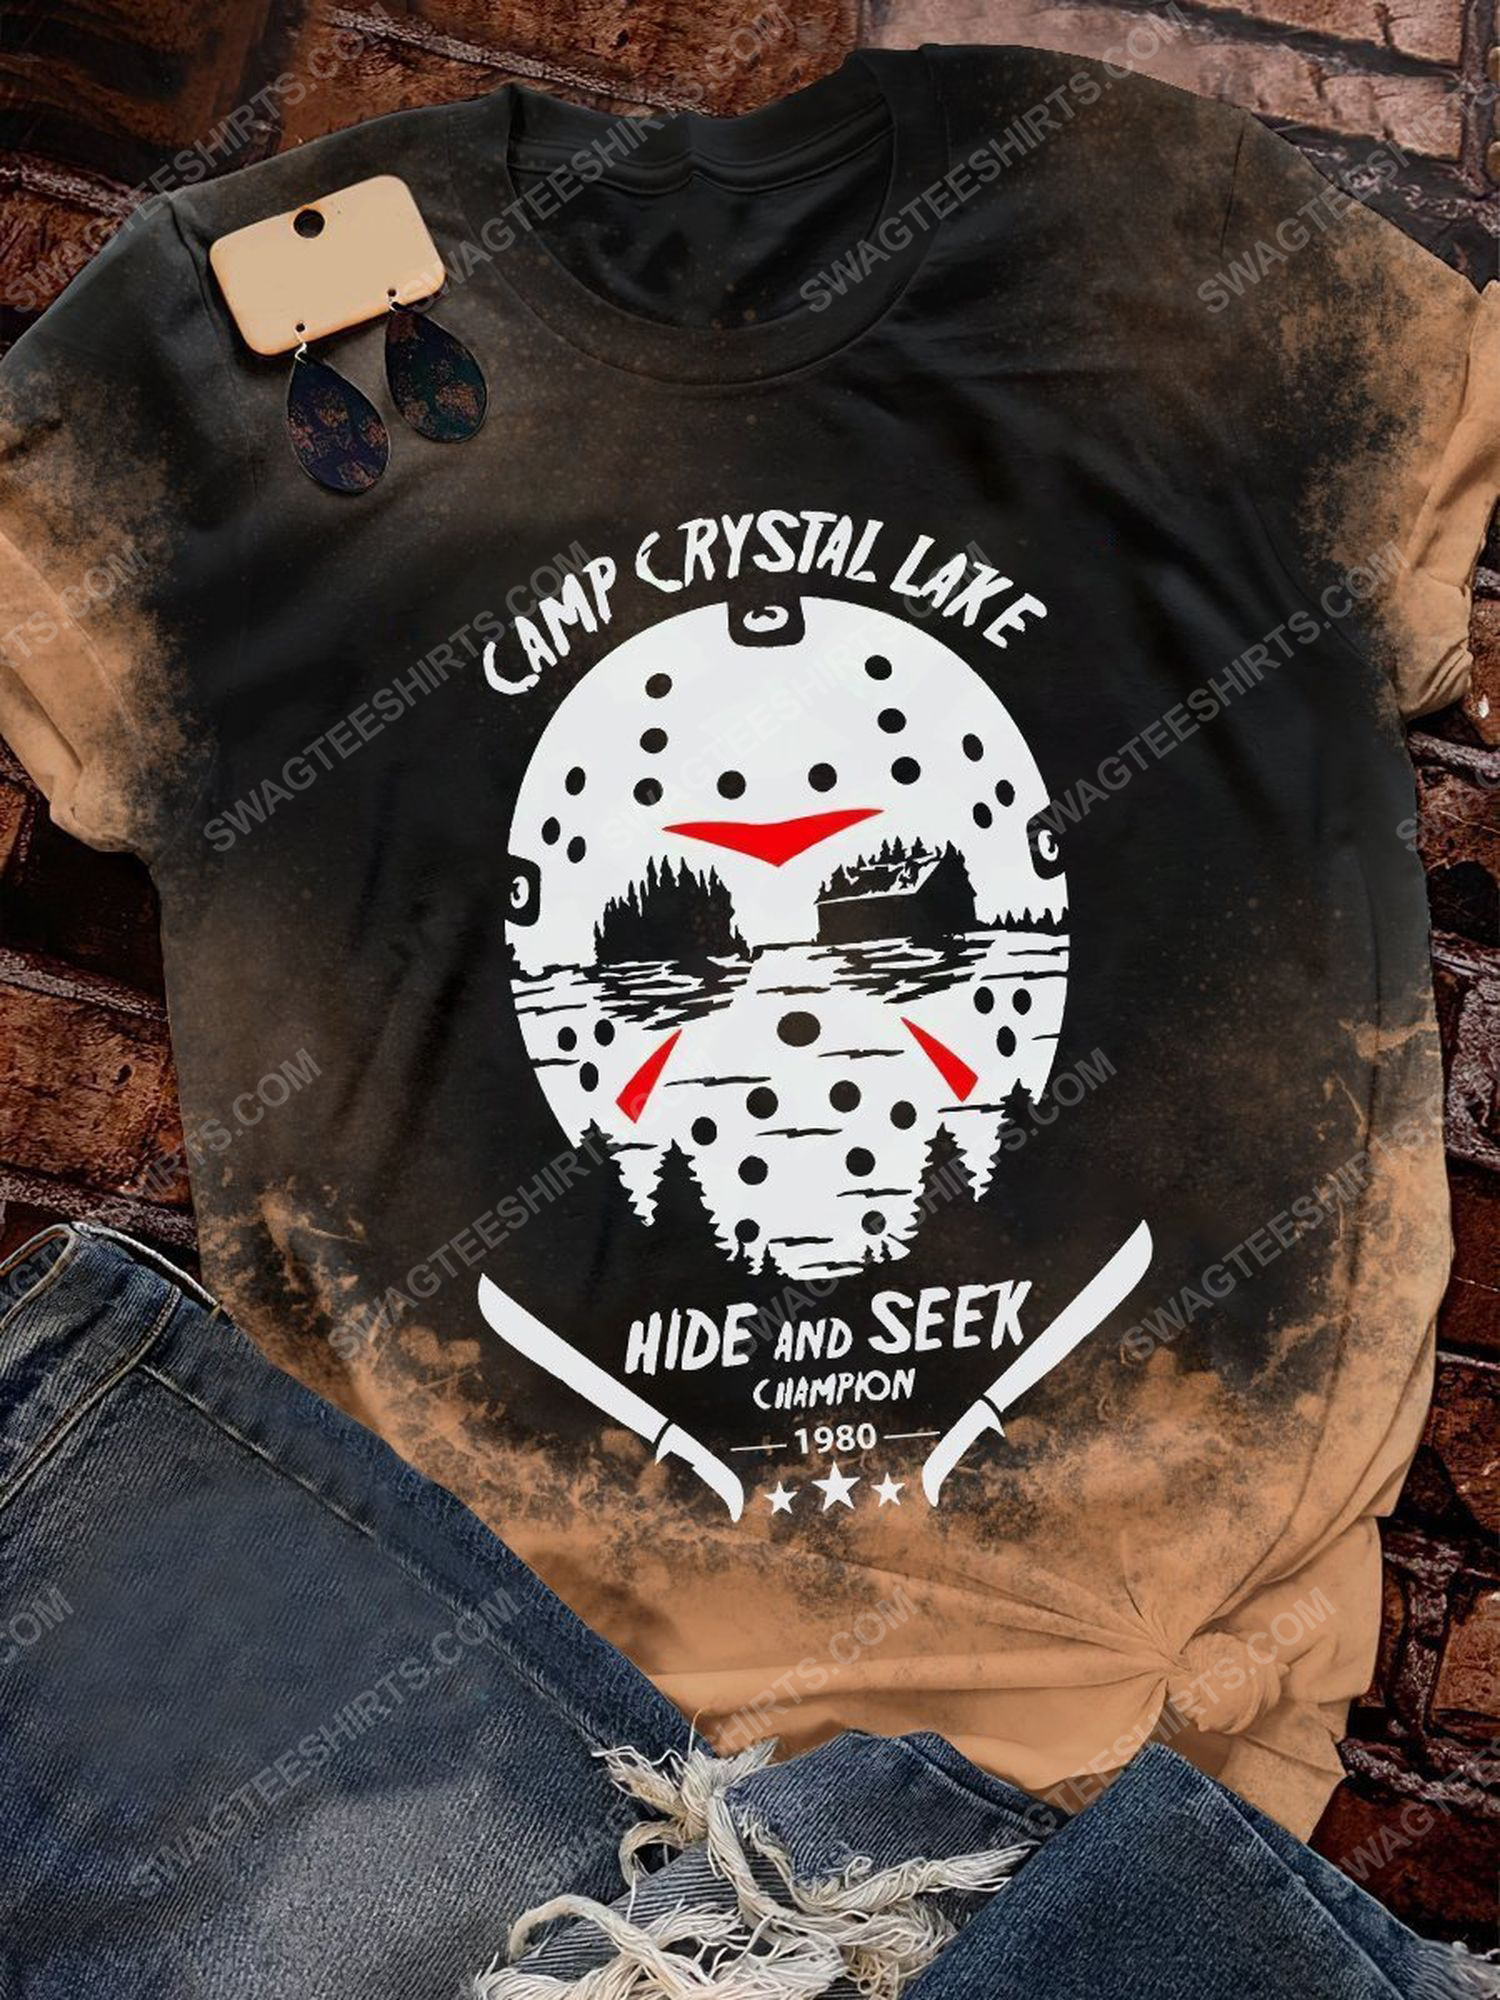 [special edition] Halloween jason camp crystal lake hide and seek champion shirt – maria (halloween)